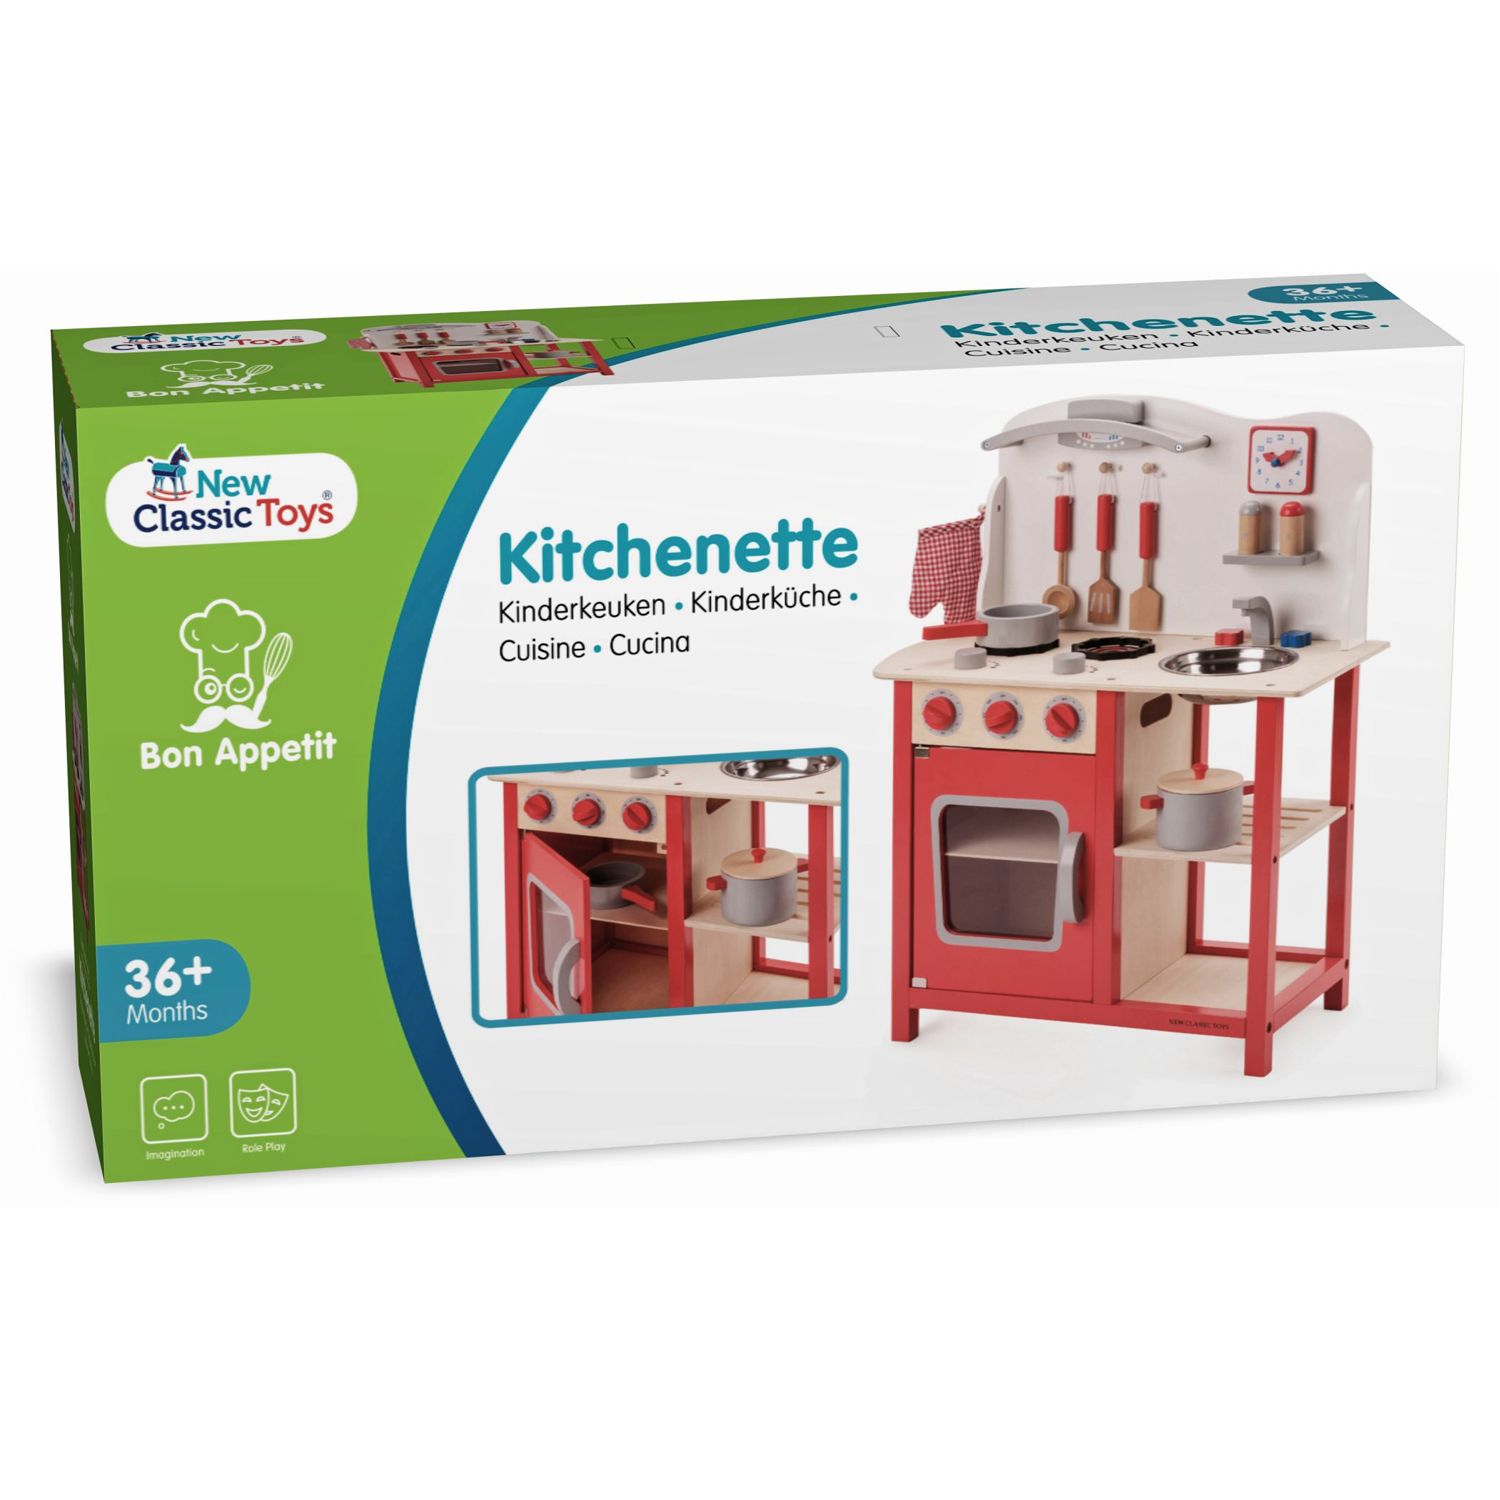 Küche New classic toys Kitchenette